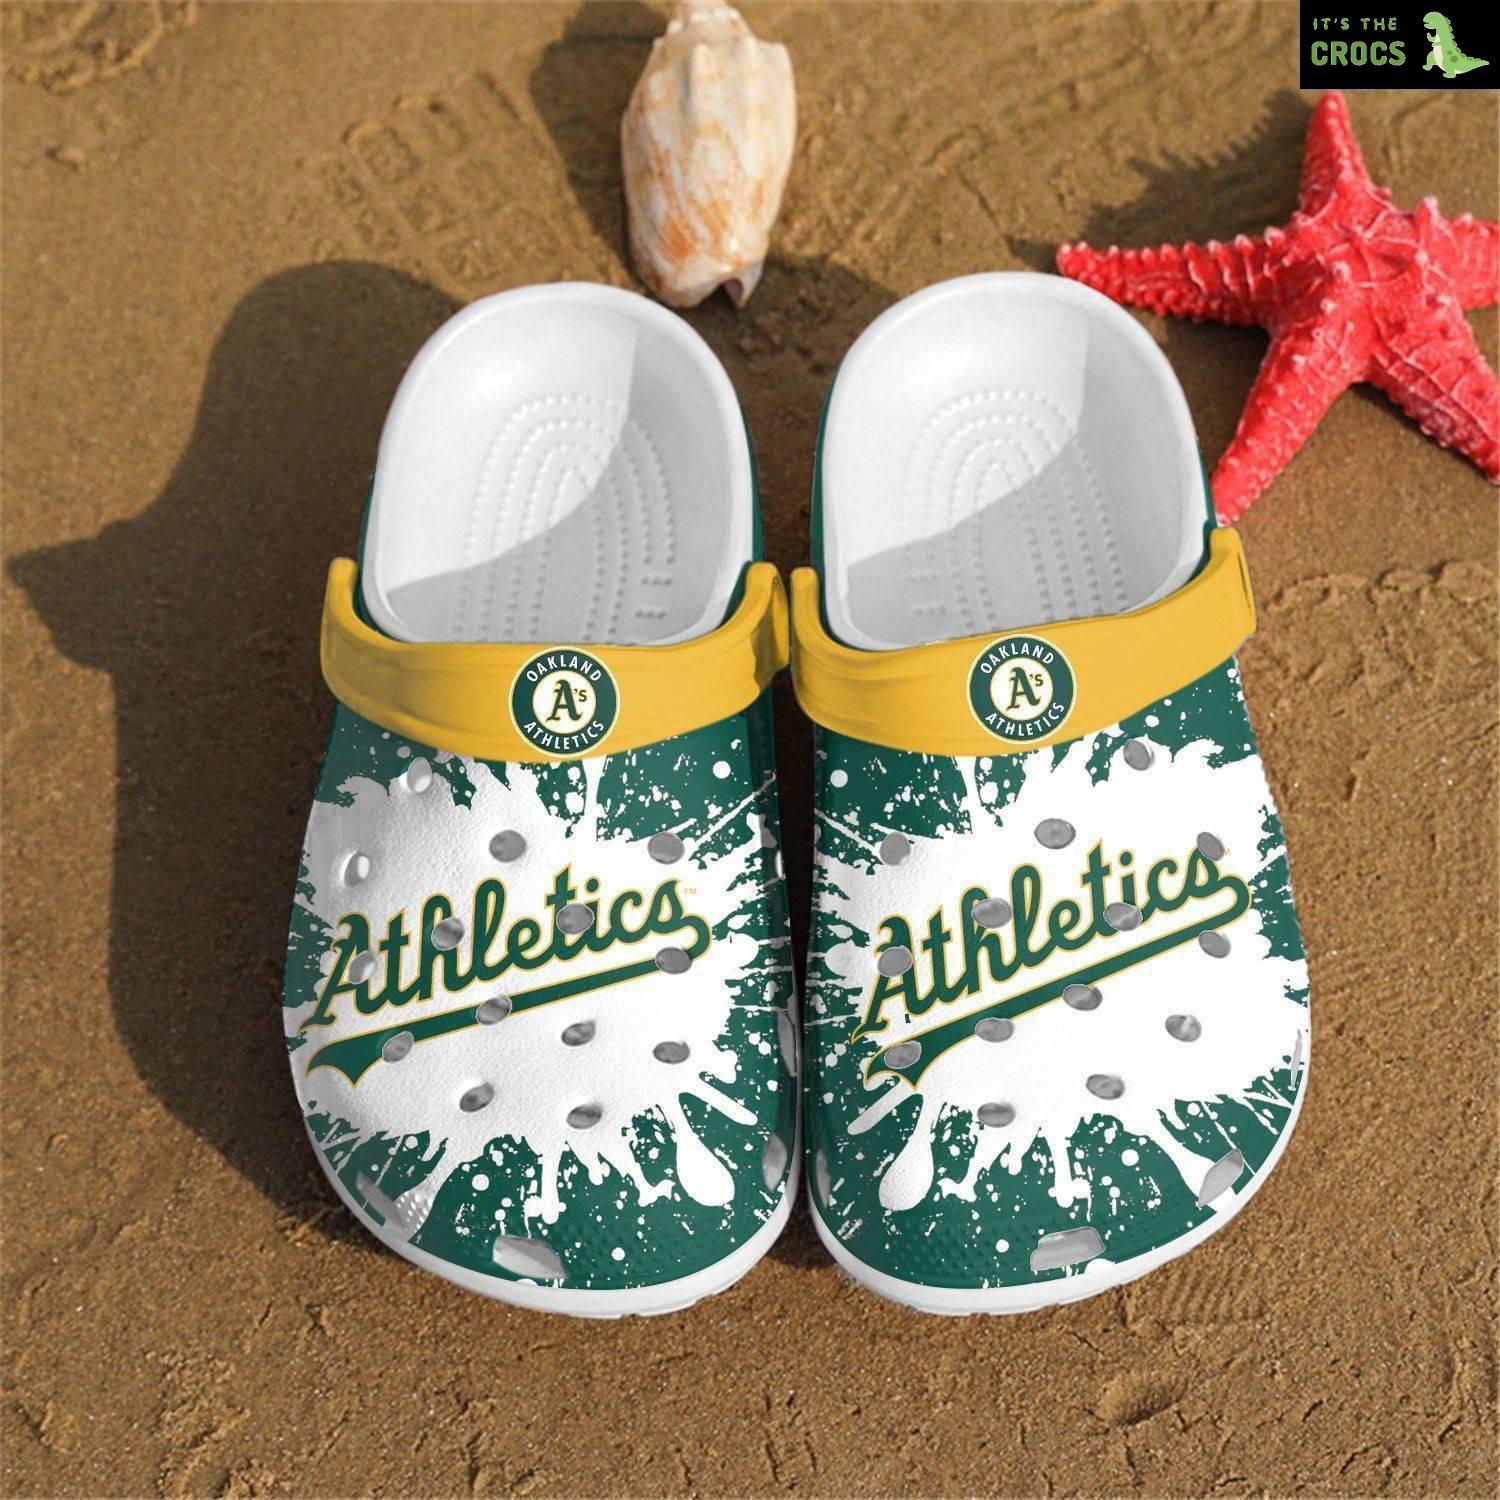 Oakland Athletics Mlb Gift For Fan Rubber Crocs Clog Shoescrocband Clogs Comfy